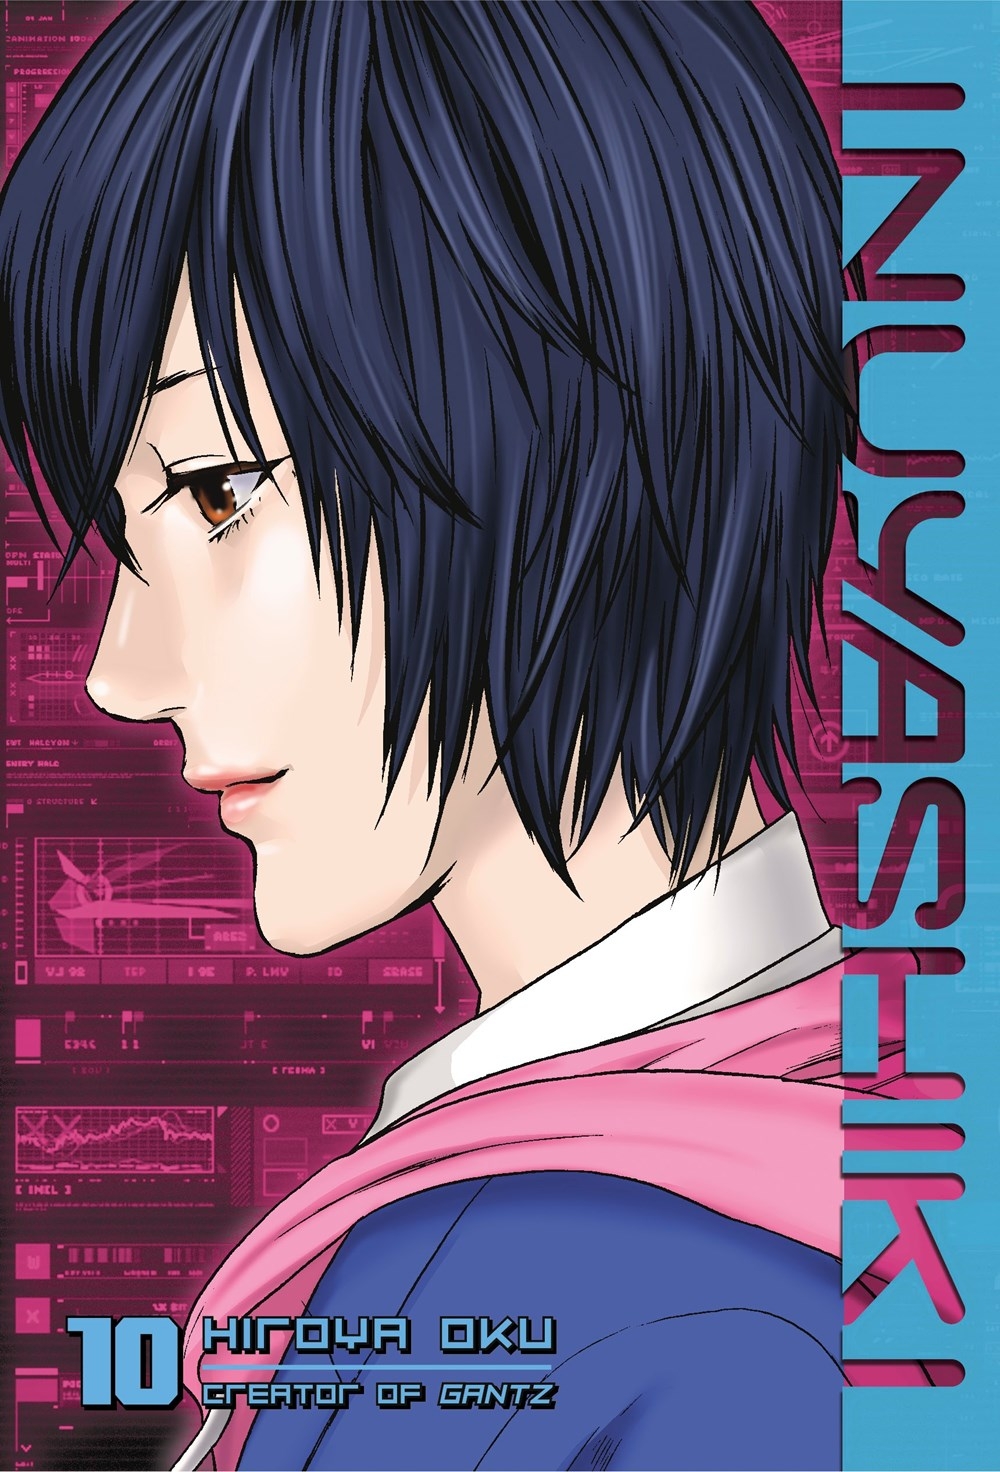 Inuyashiki anime: Inuyashiki: Last Hero- A Sci-Fi anime on Hiroya